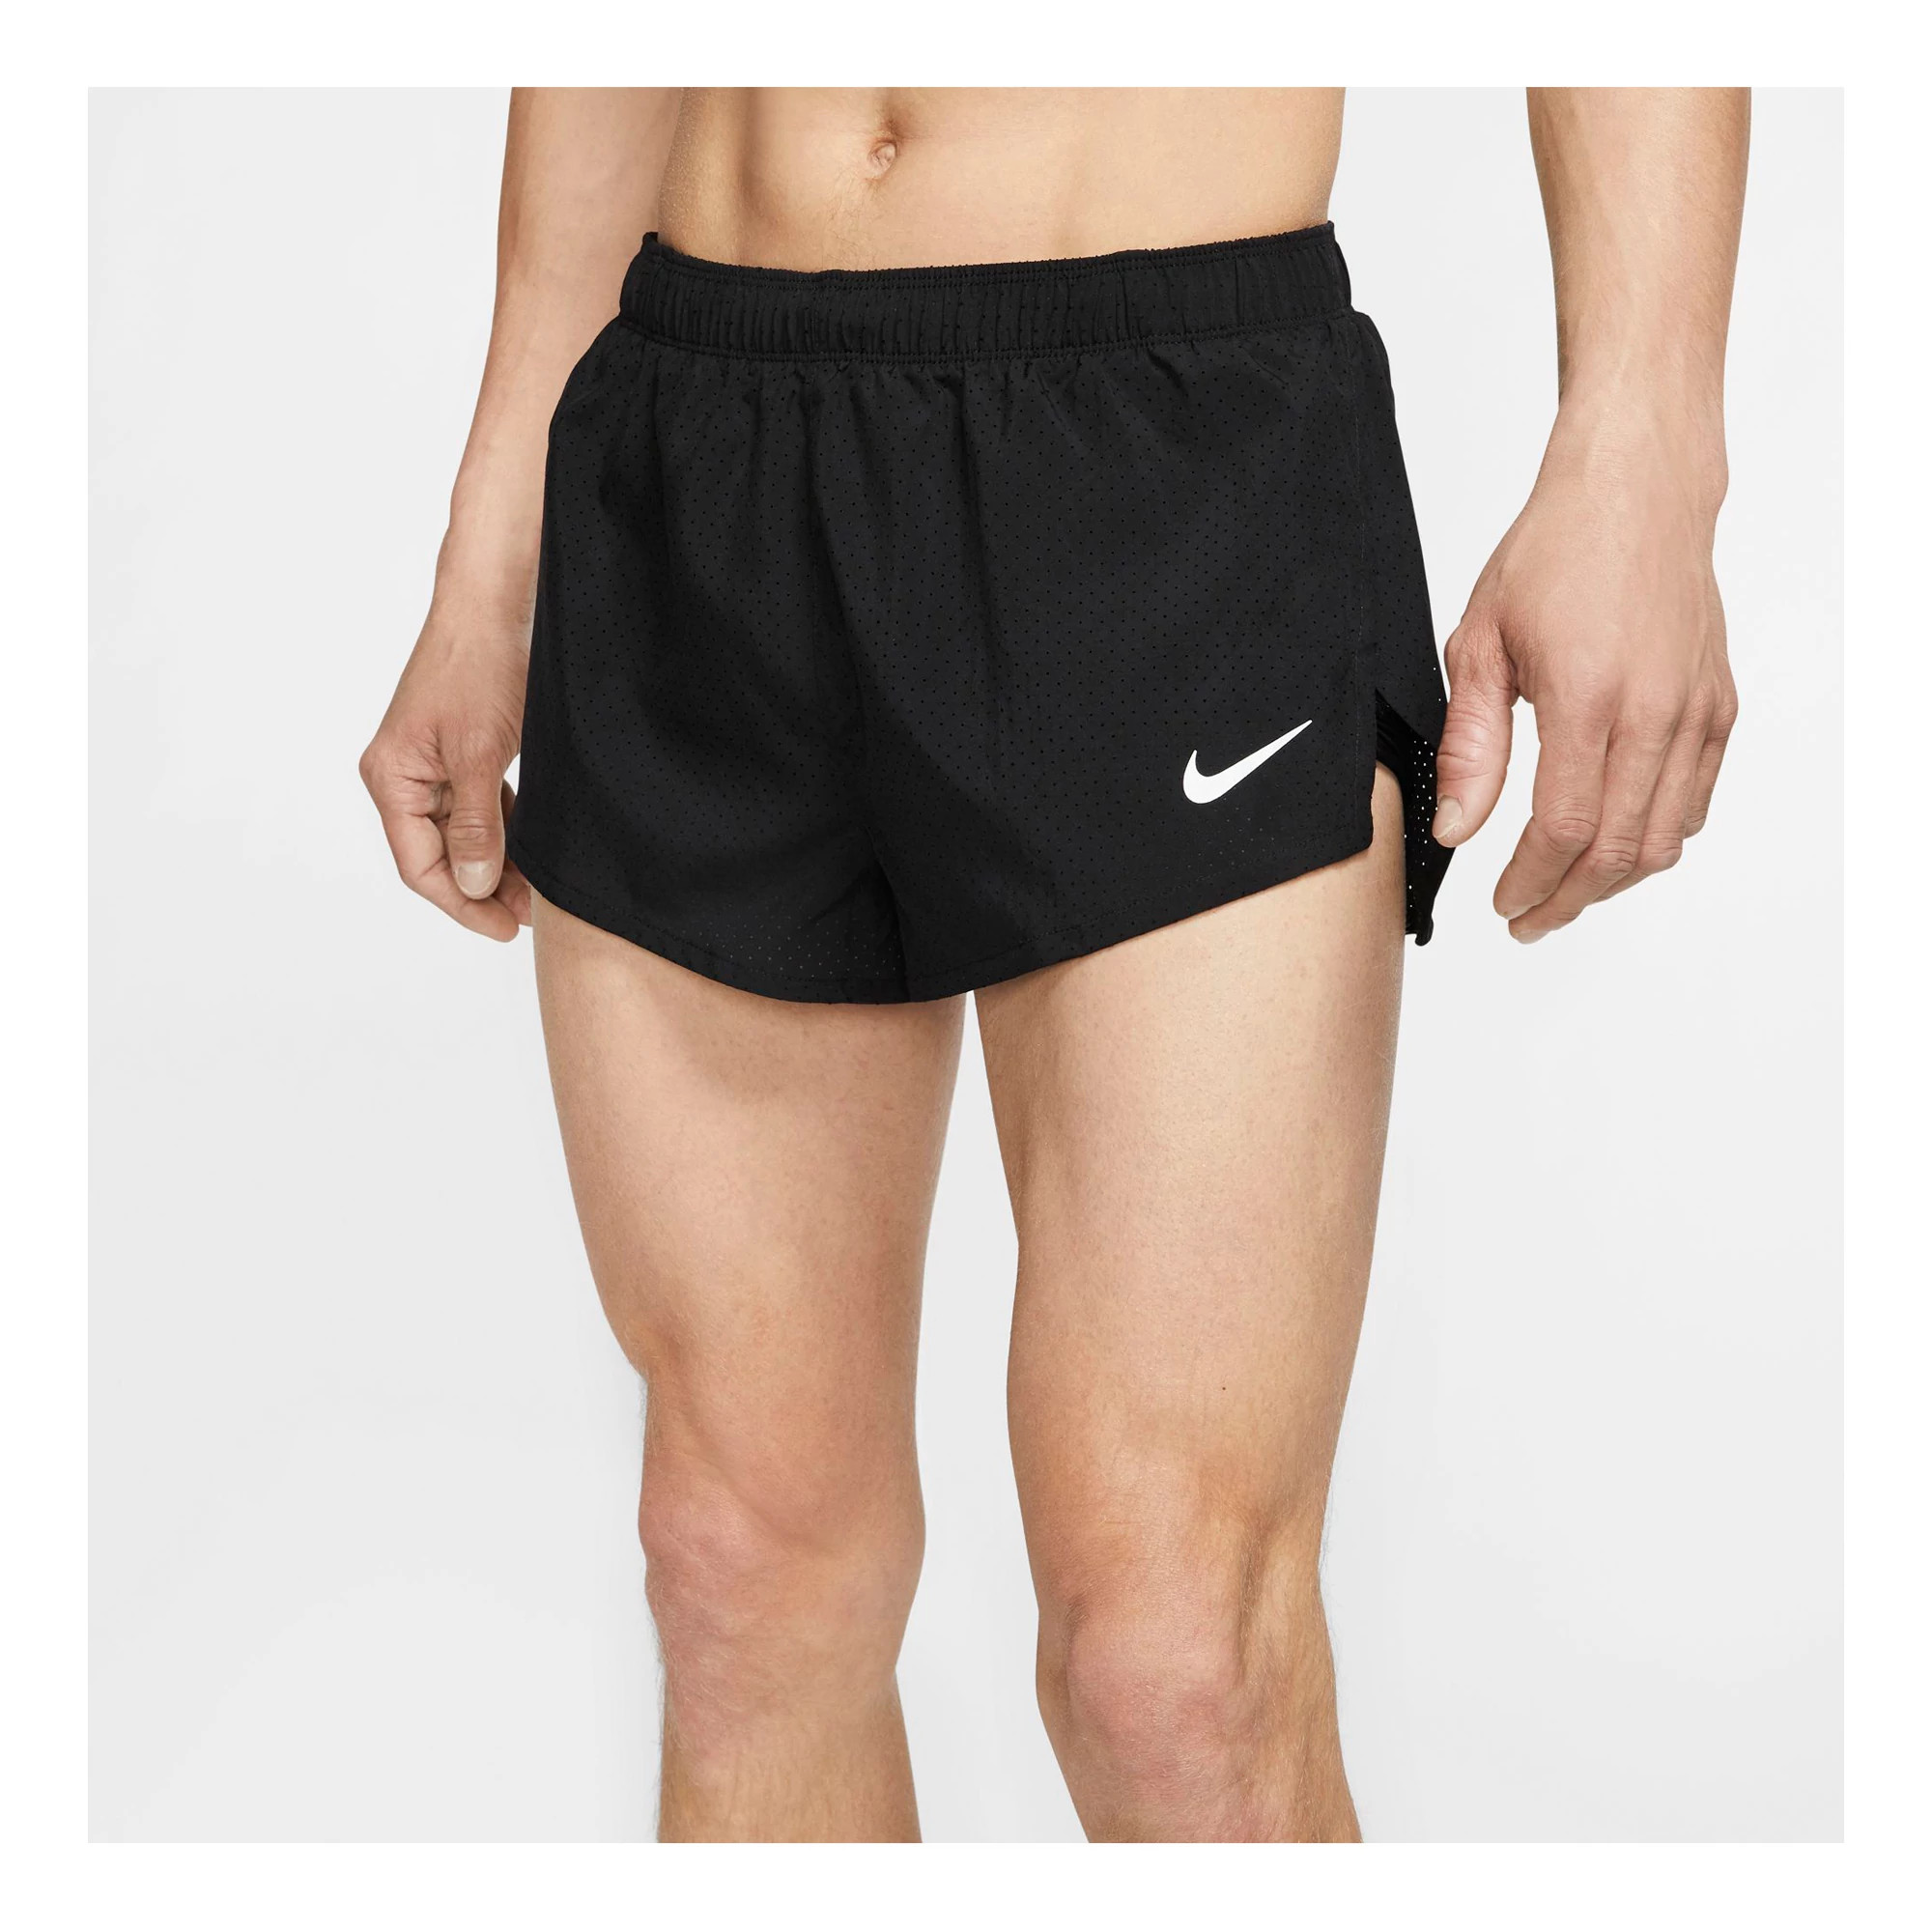 SIDA El principio manzana Mens Nike Dri-FIT Fast 2" Lined Shorts